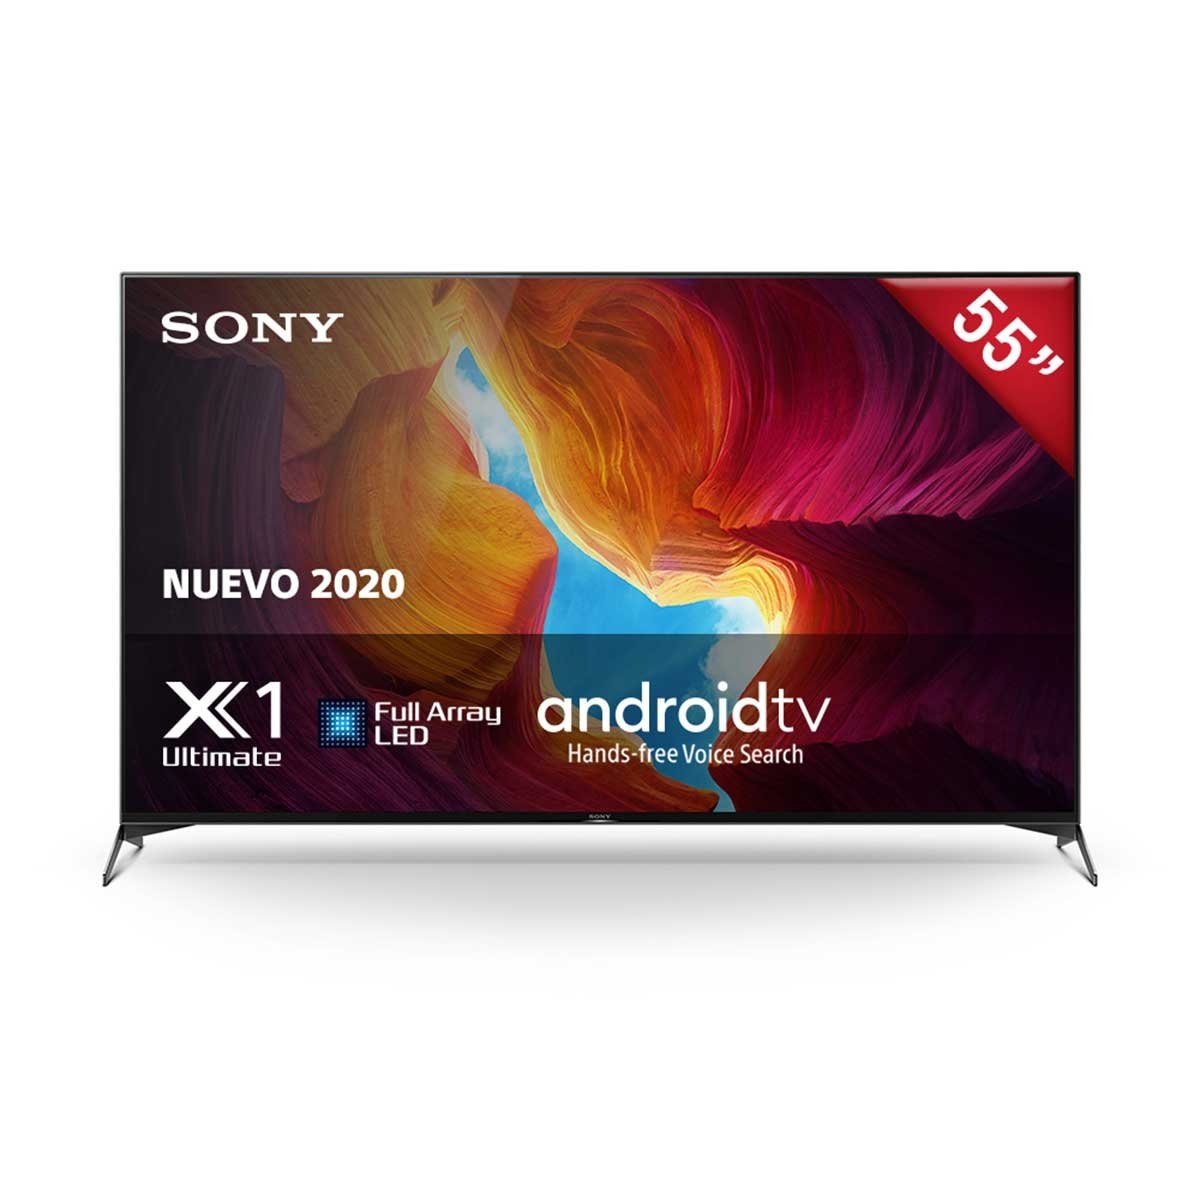 Pantalla Sony 55" 4K Uhd Android Tv Xbr-55X950H